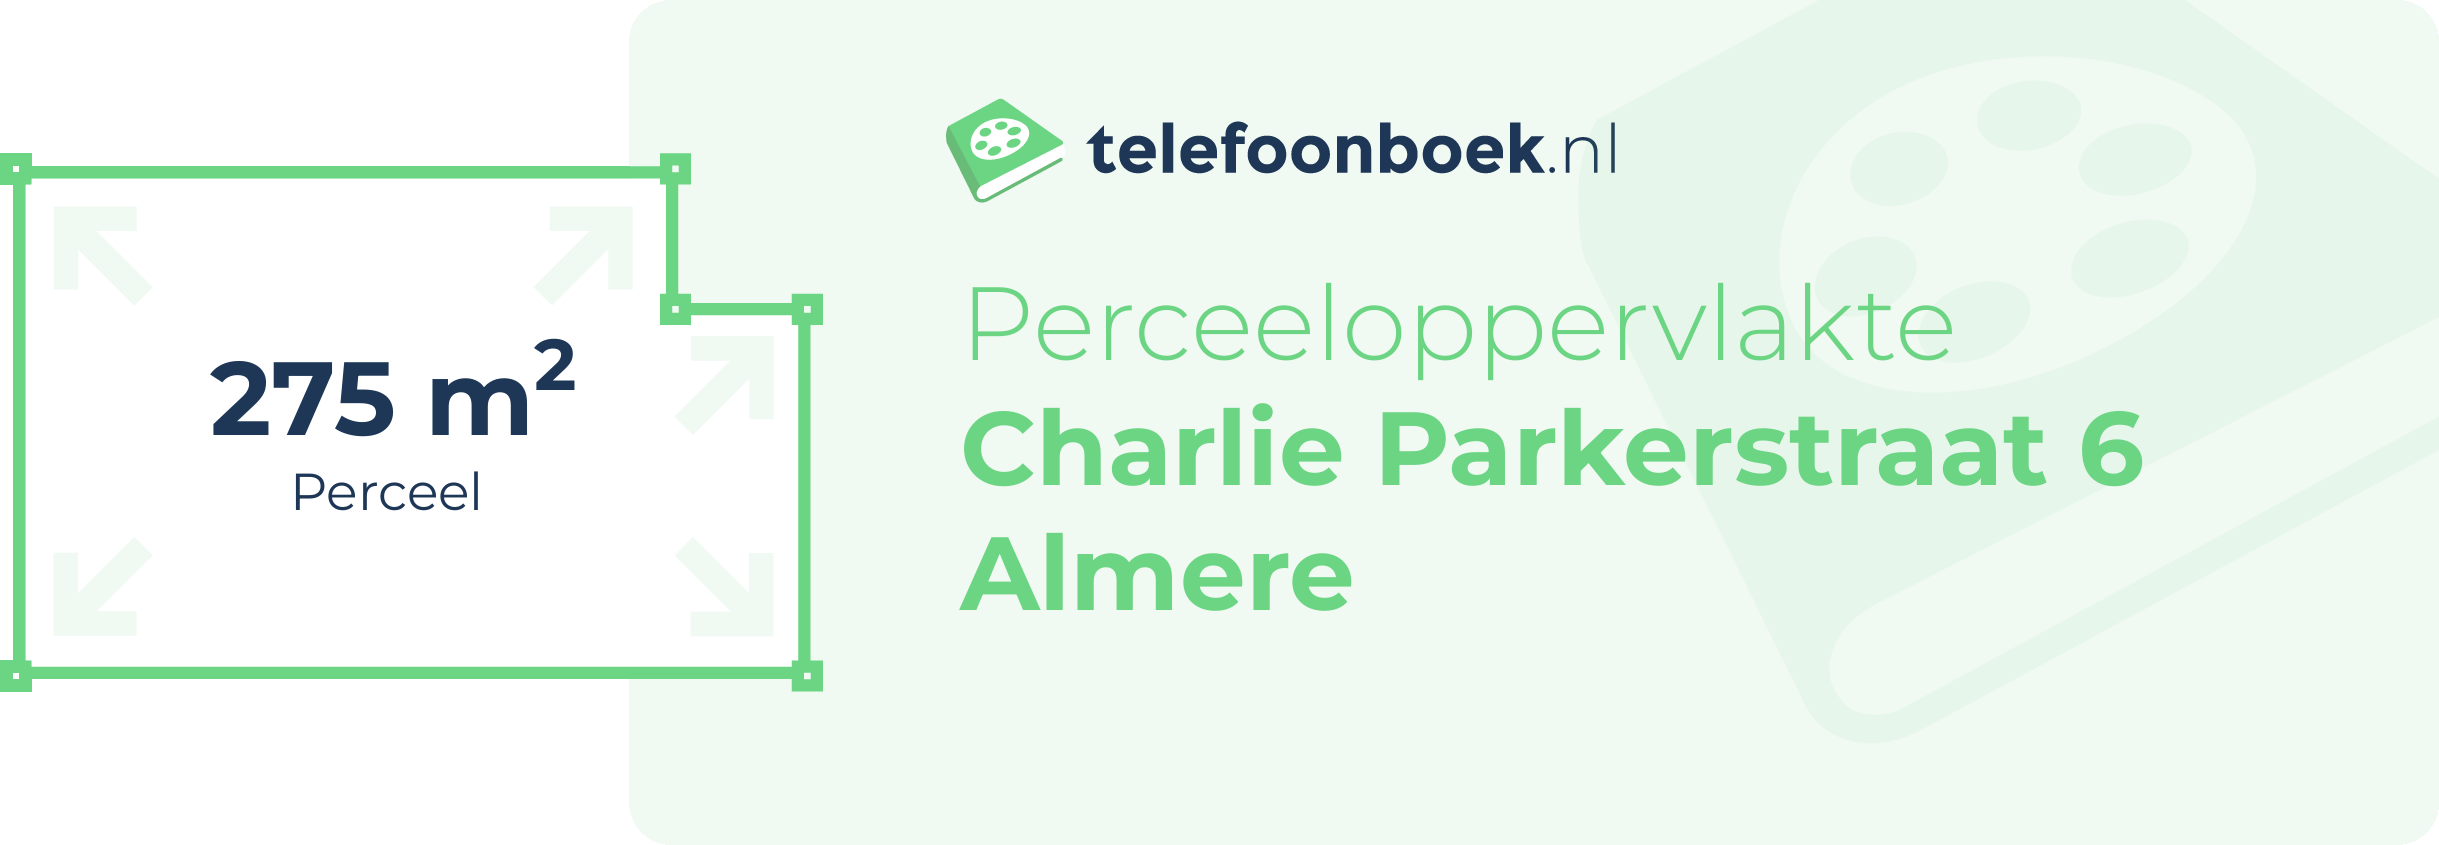 Perceeloppervlakte Charlie Parkerstraat 6 Almere